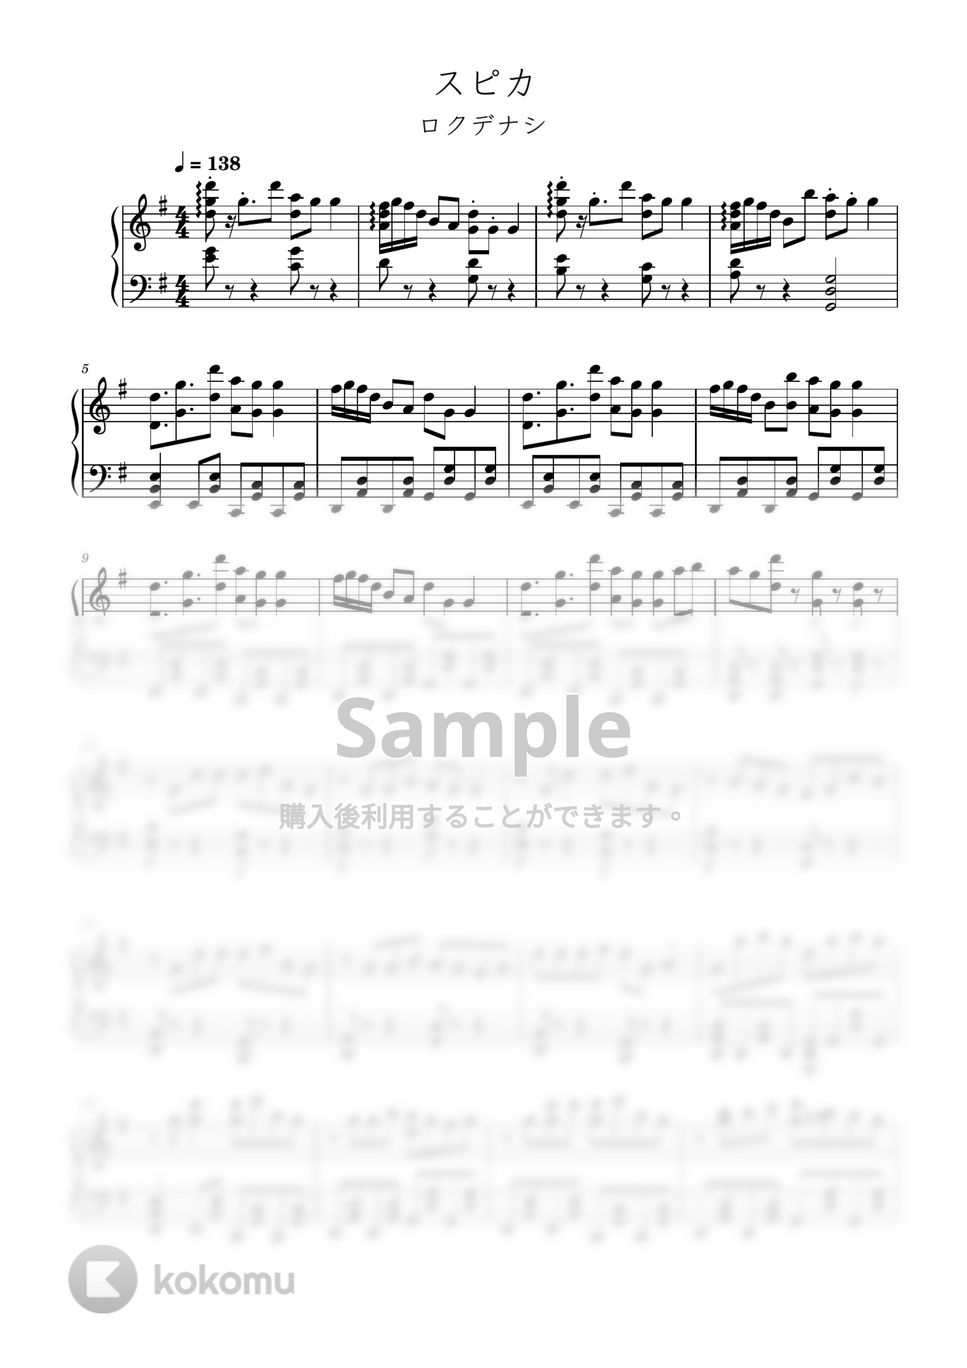 013 - Spica - ロクデナシ / Rokudenashi Sheet music for Piano (Solo)